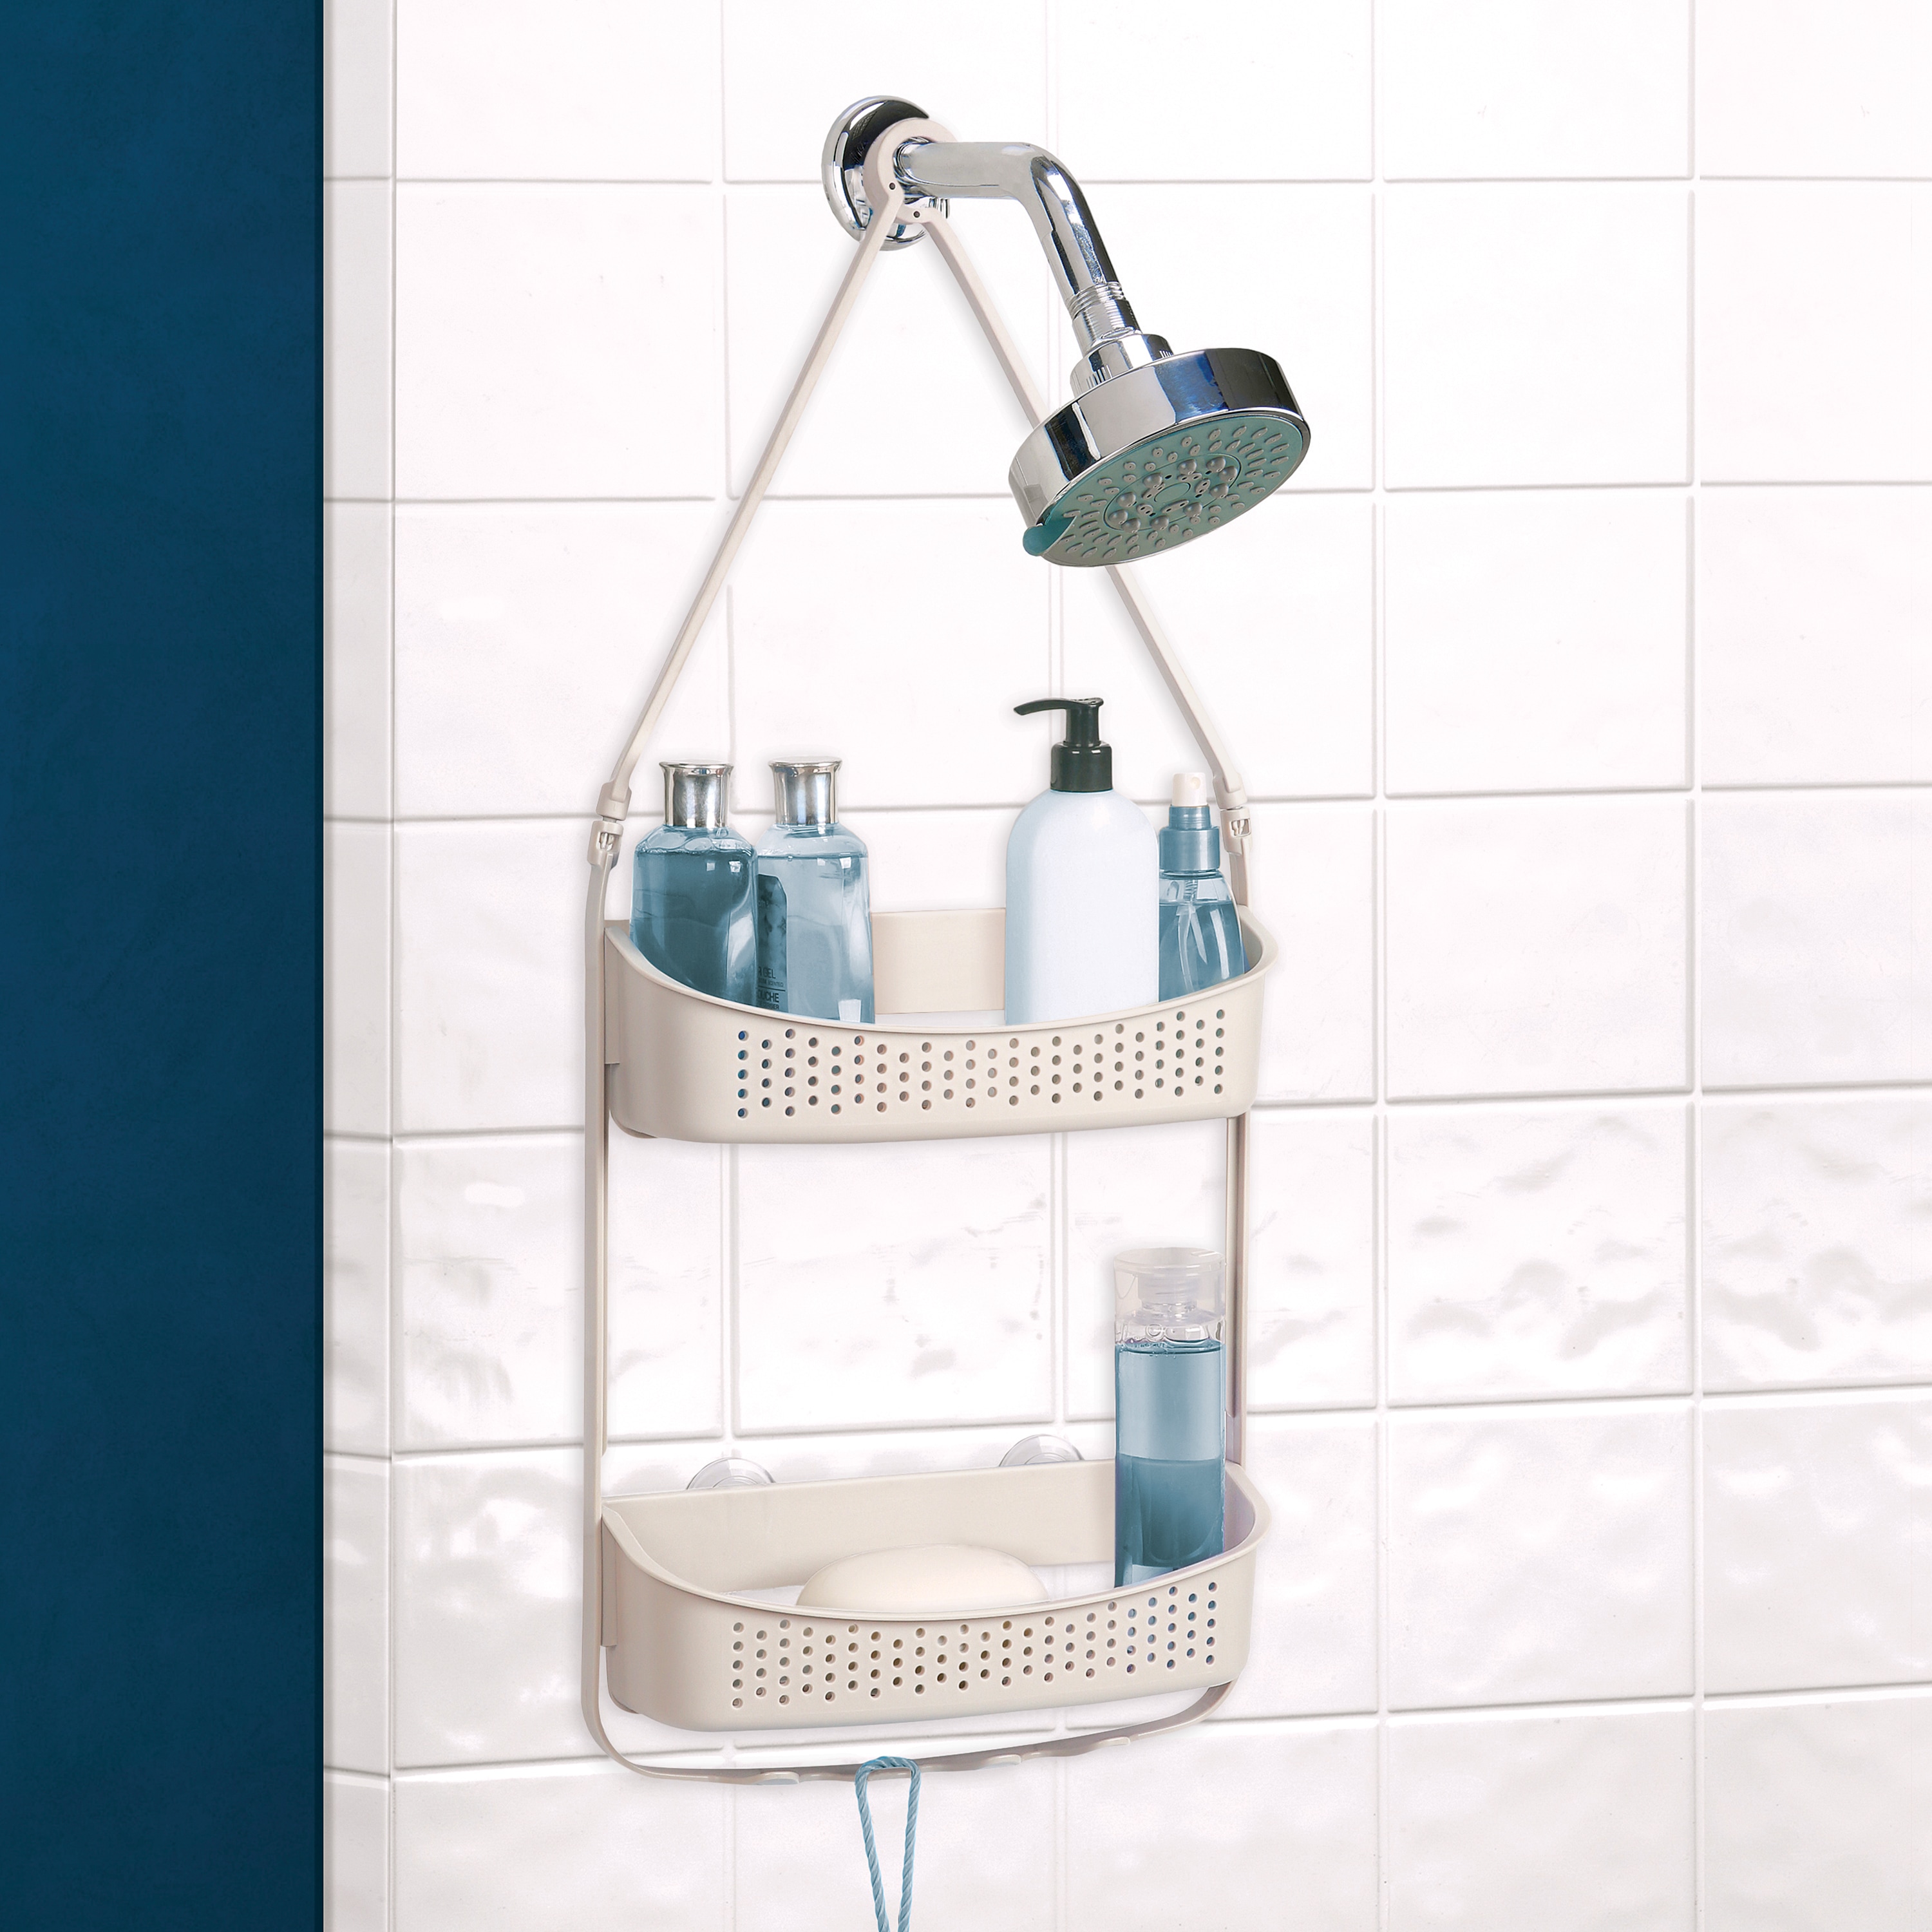 Convertible/Flexible Shower Caddy White - Bath Bliss